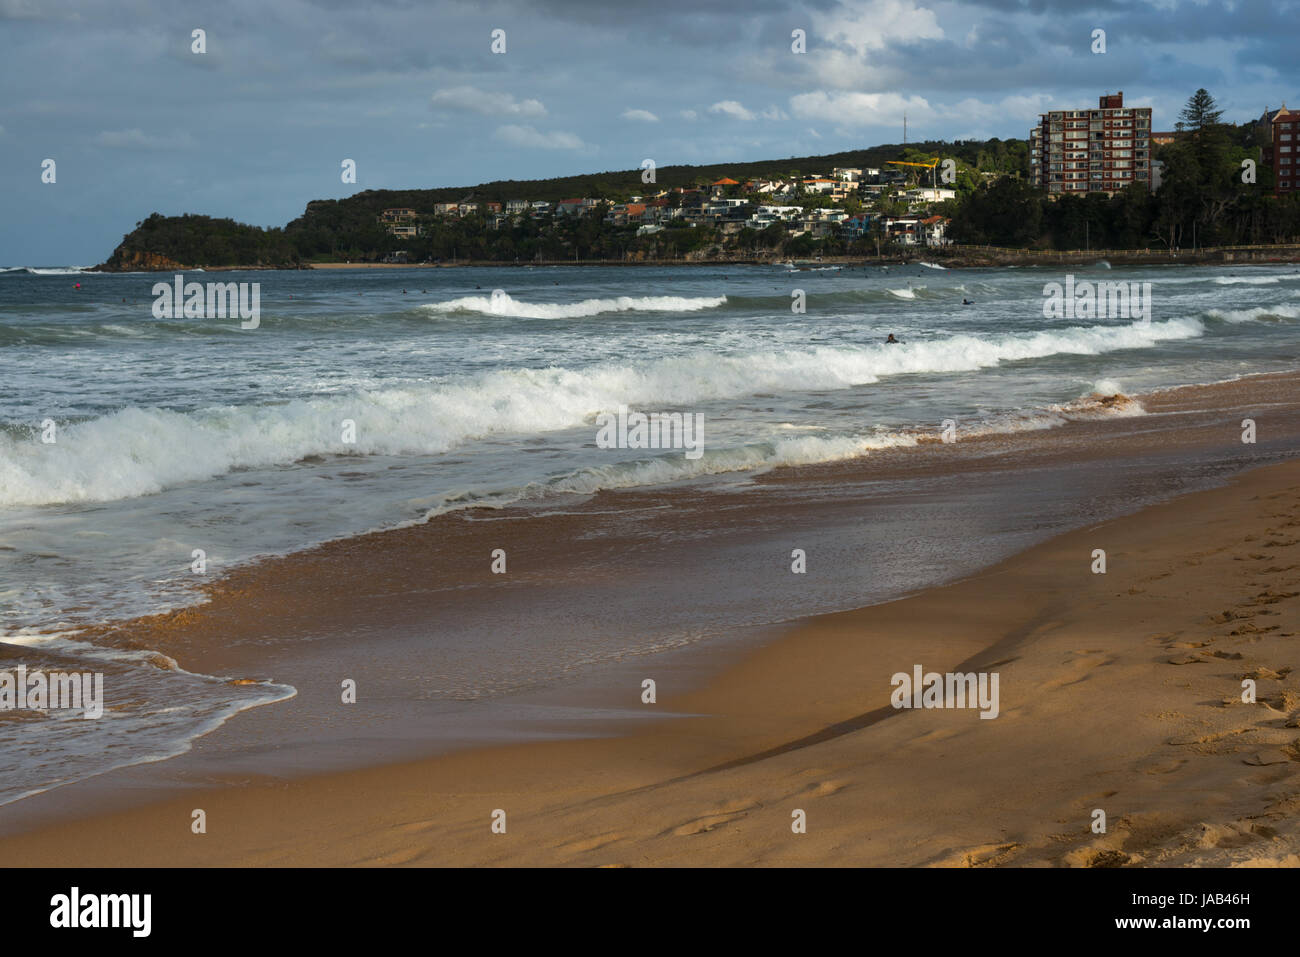 Manly beach, Sydney, Australia Stock Photo